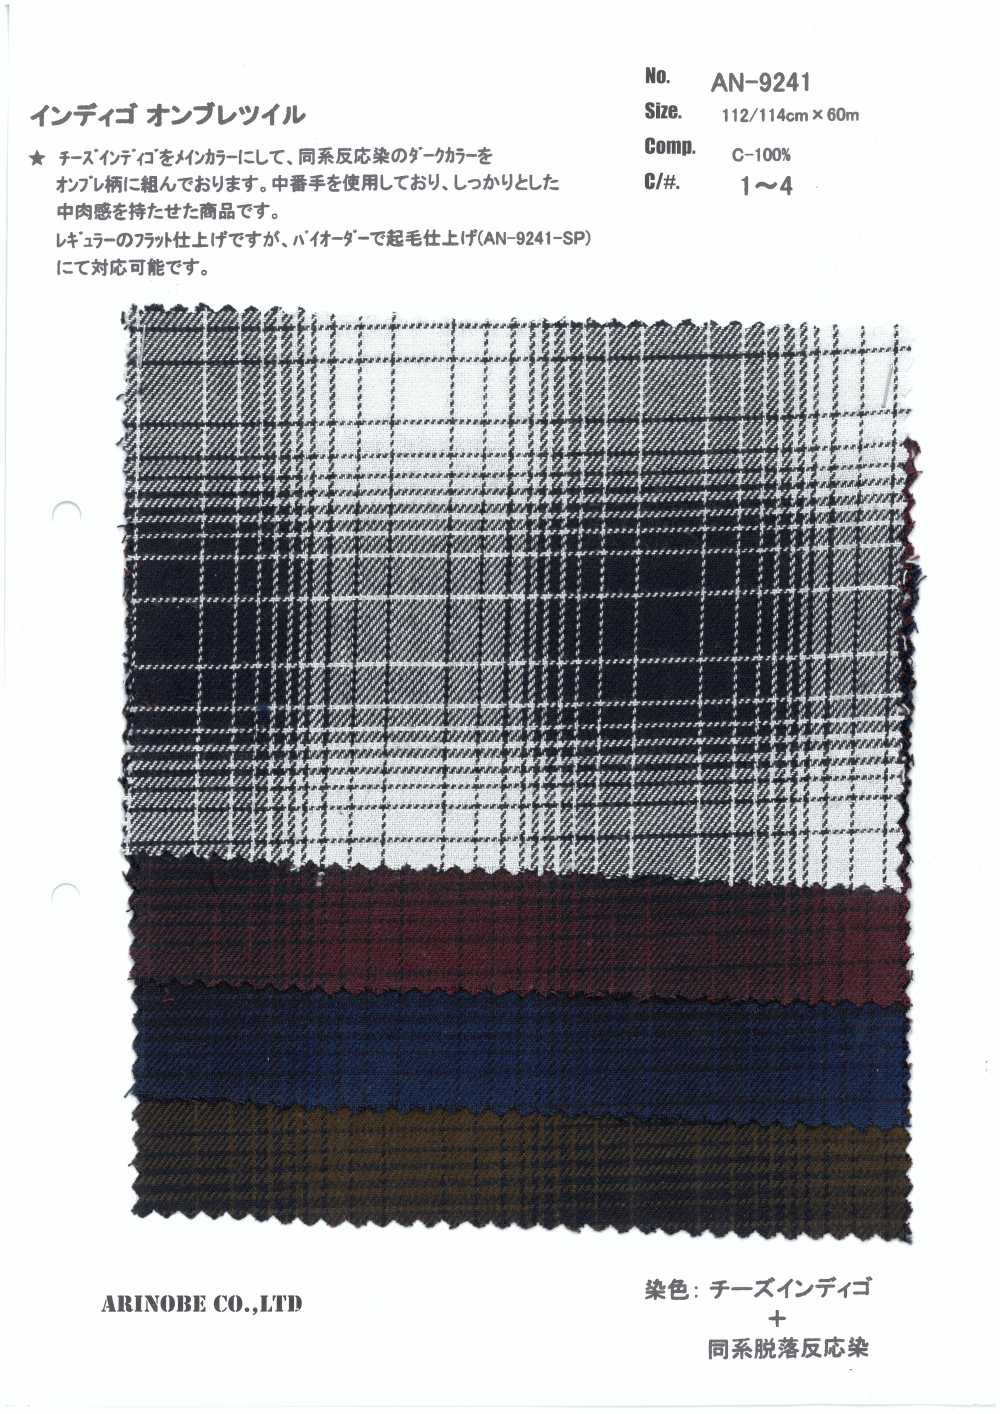 AN-9241 Indigo Ombre Twill[Textilgewebe] ARINOBE CO., LTD.